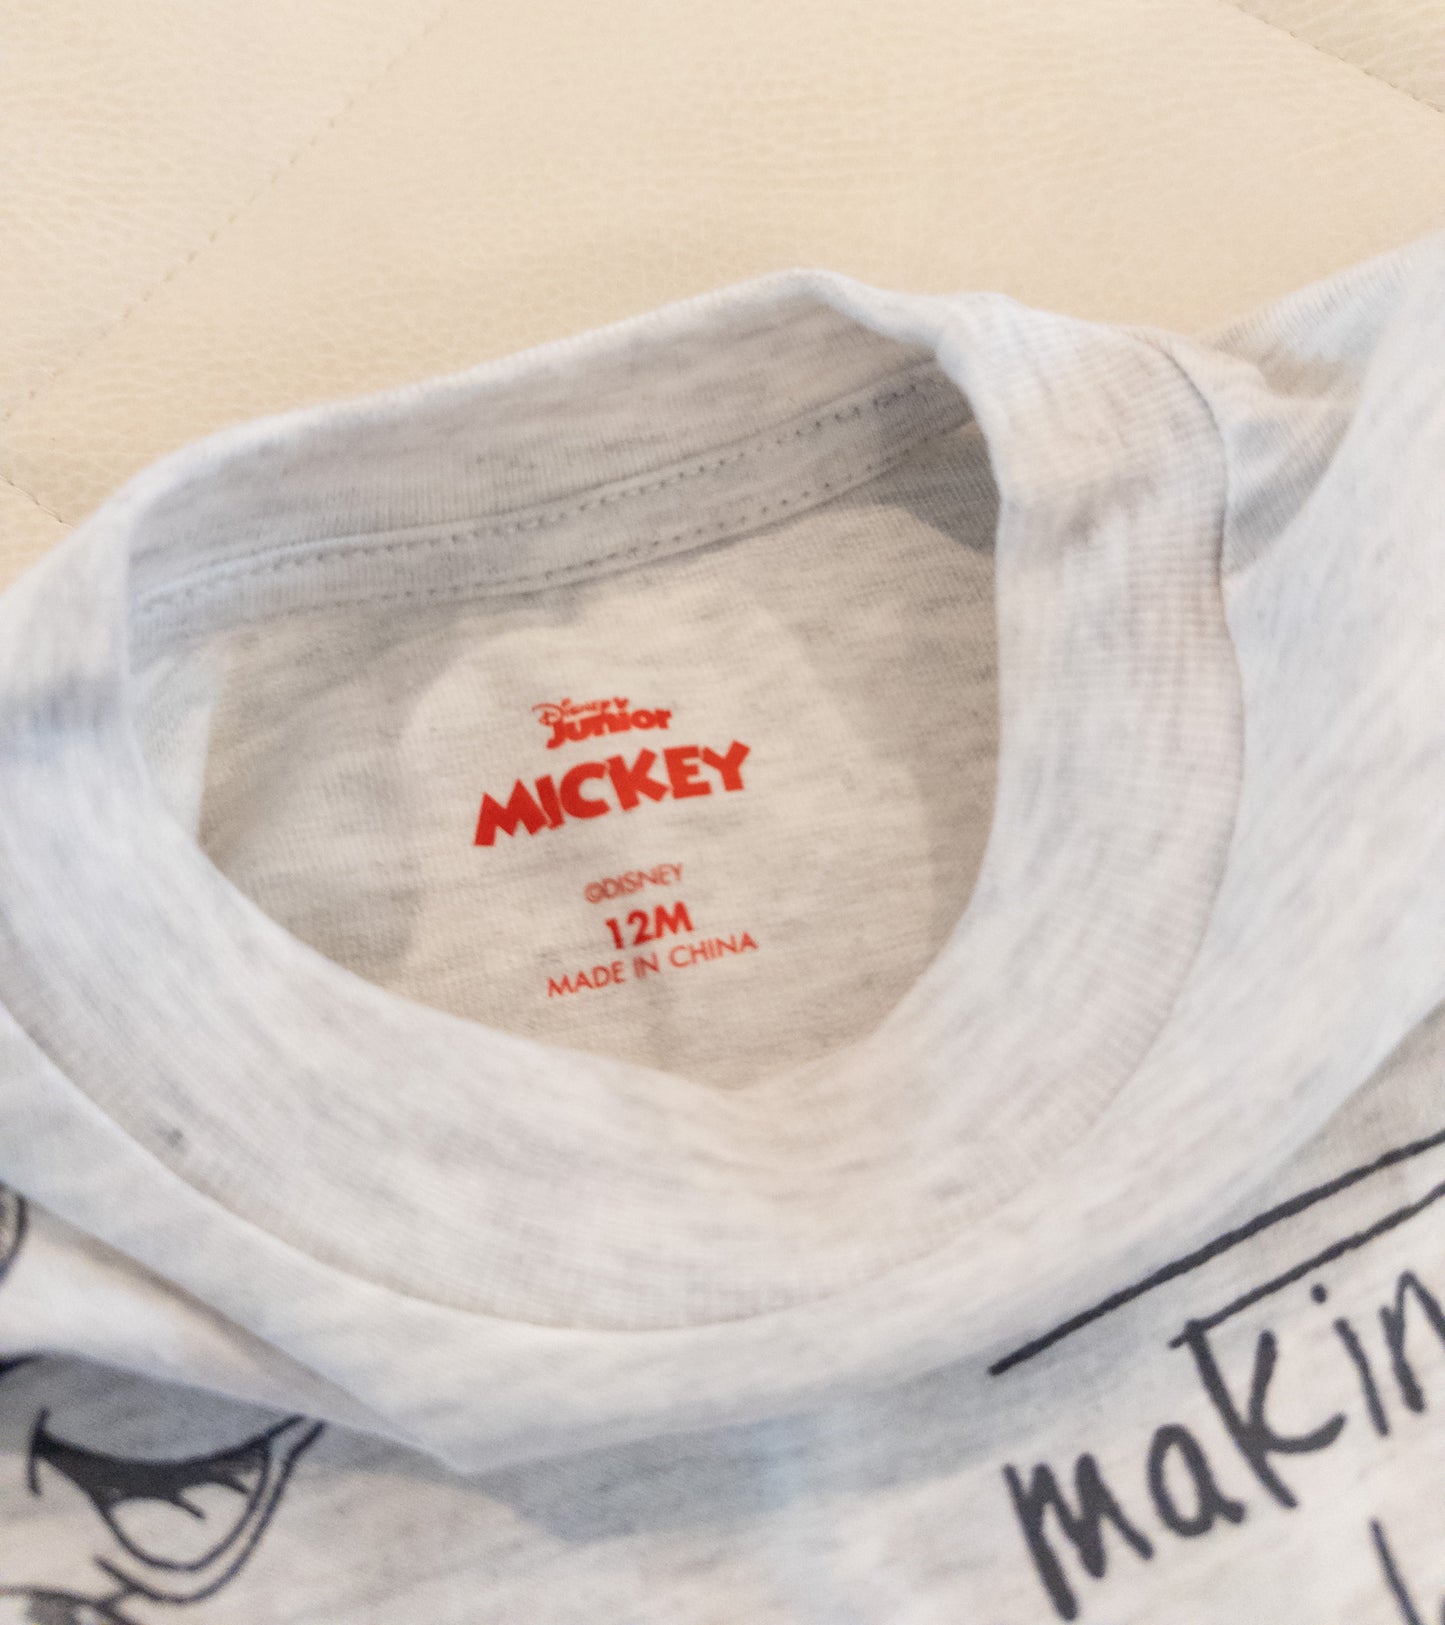 12m Disney Mickey Mouse Tee - NWOT